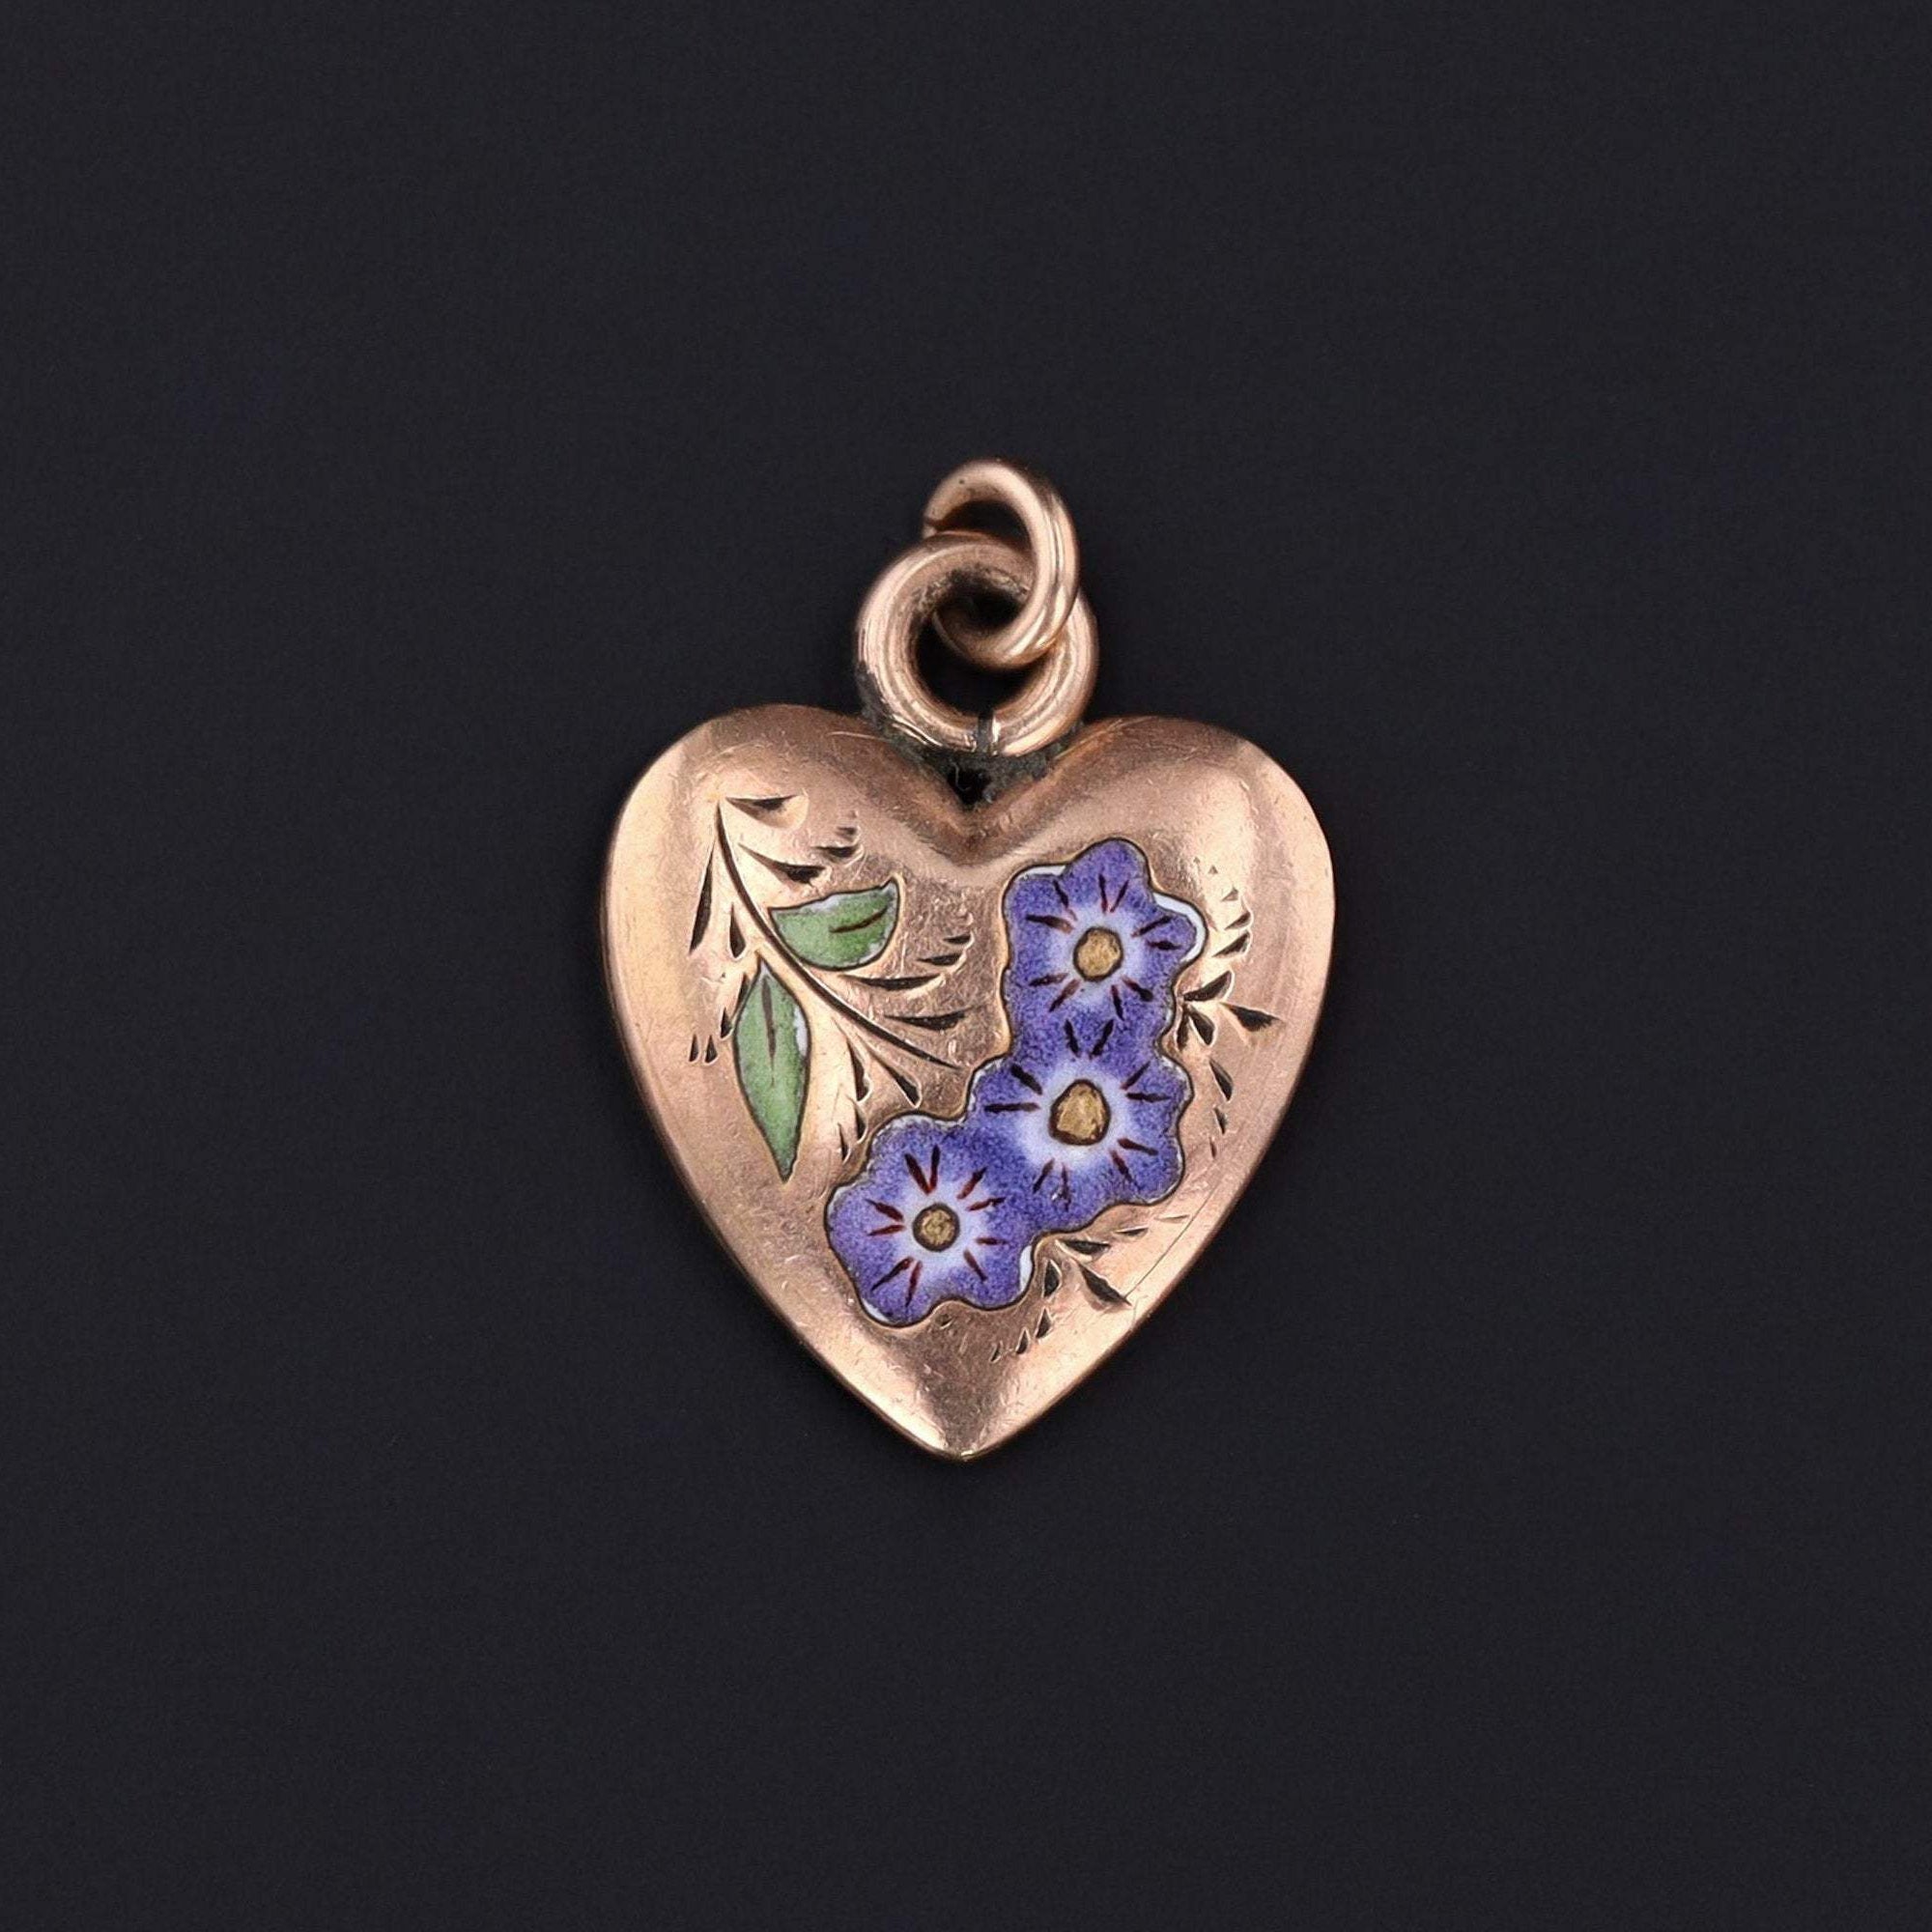 Antique Heart Charm | 14k Gold Heart | Heart Charm with Purple Enamel Flowers | Antique Charm | Love Token